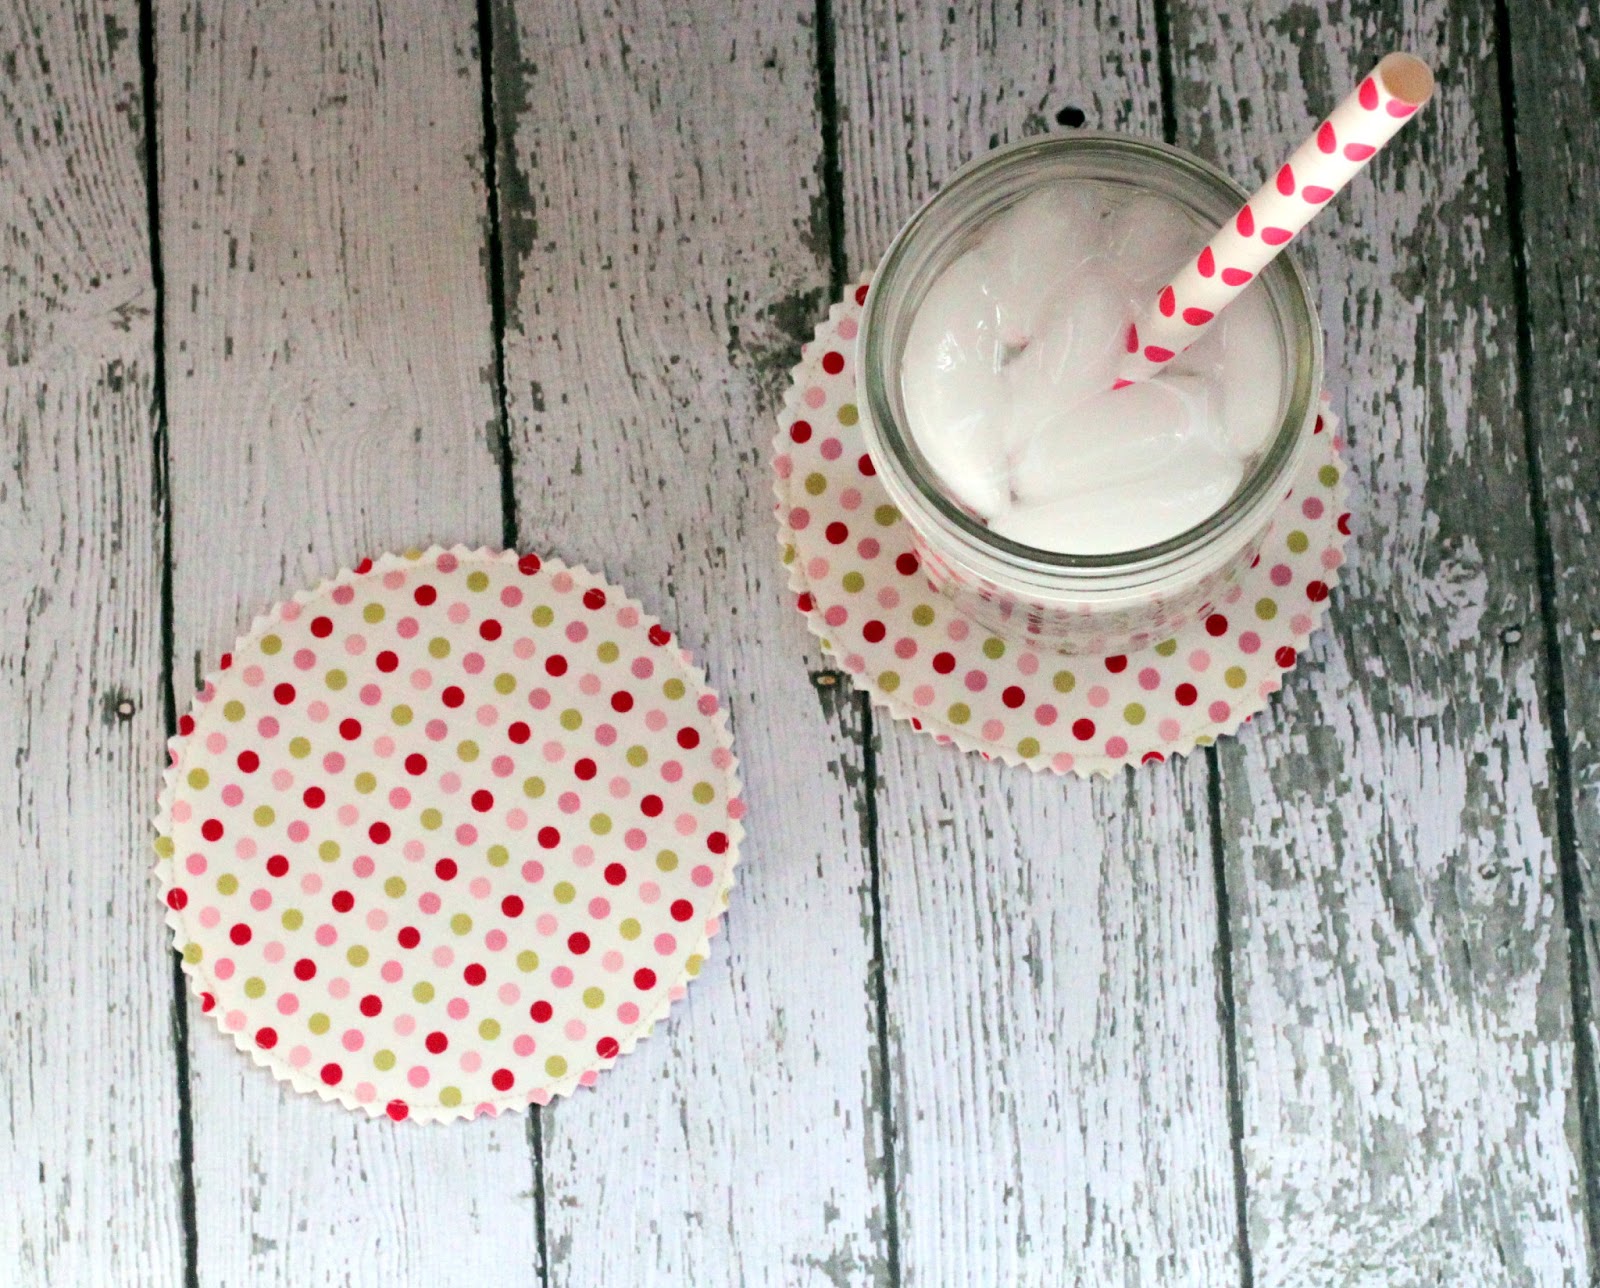 Polka Dot Drink Coasters - A Sewing Pattern